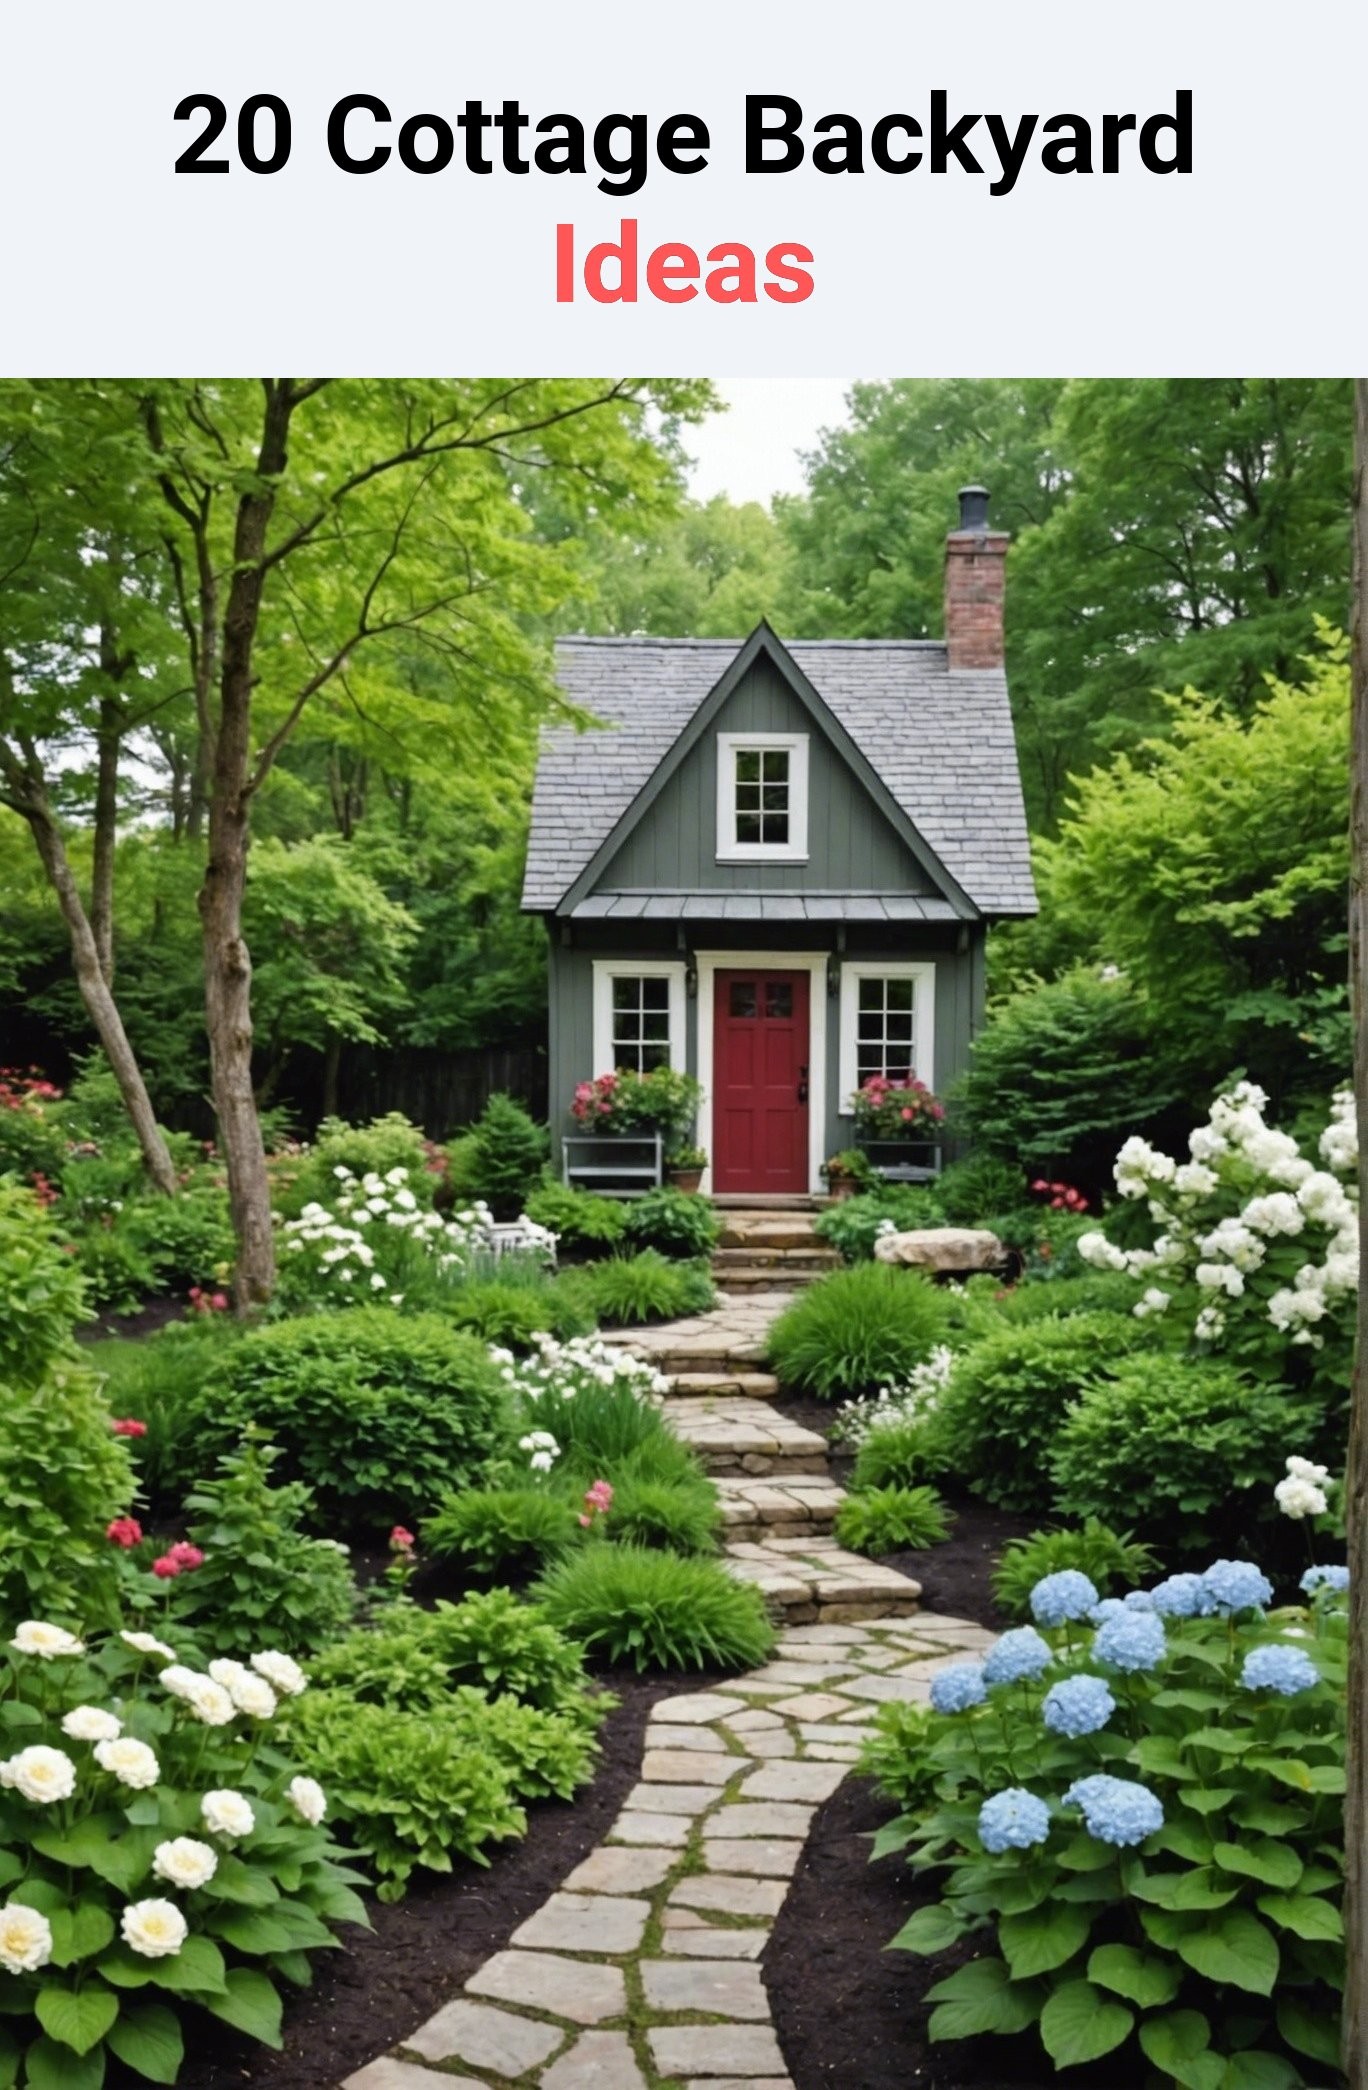 20 Cottage Backyard Ideas